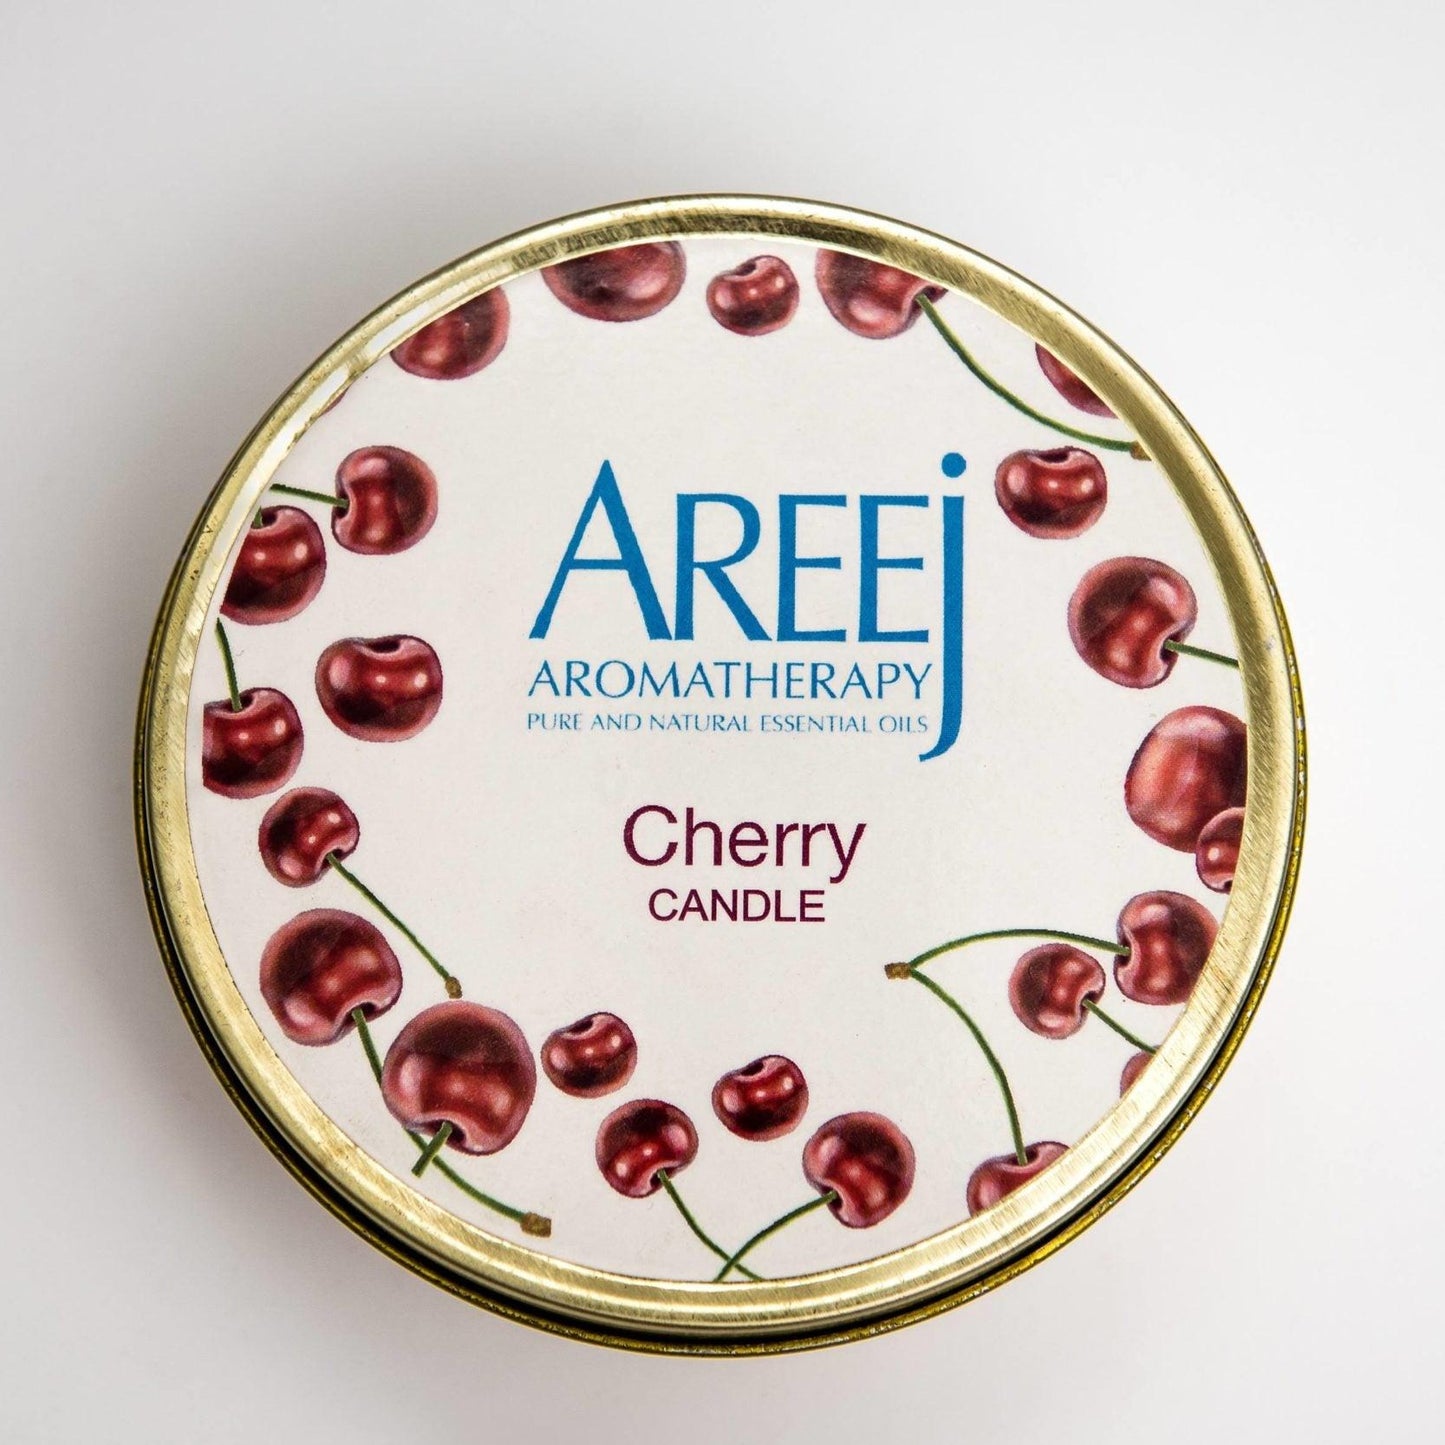 Areej Cherry Candle - Beauty Bounty